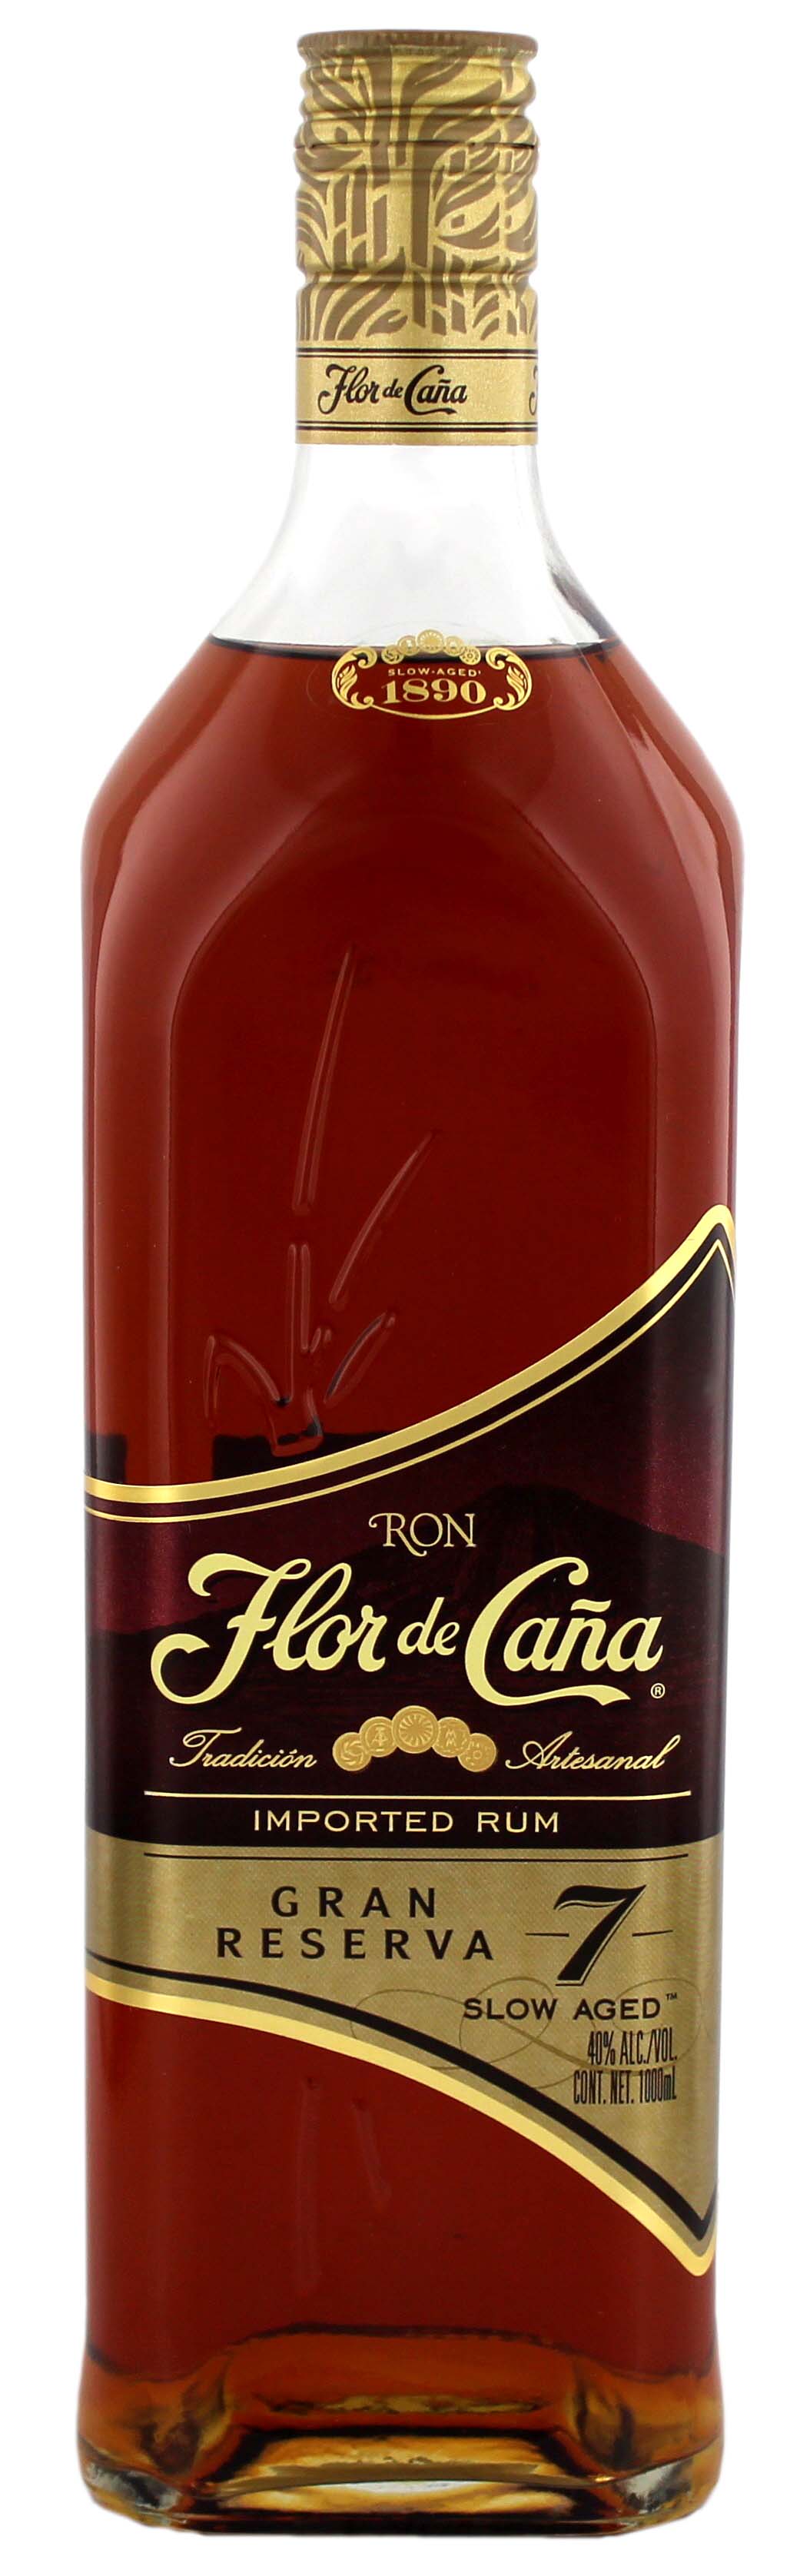 Flor de Cana Gran Reserva 7 jetzt kaufen im Drinkology Online Shop !